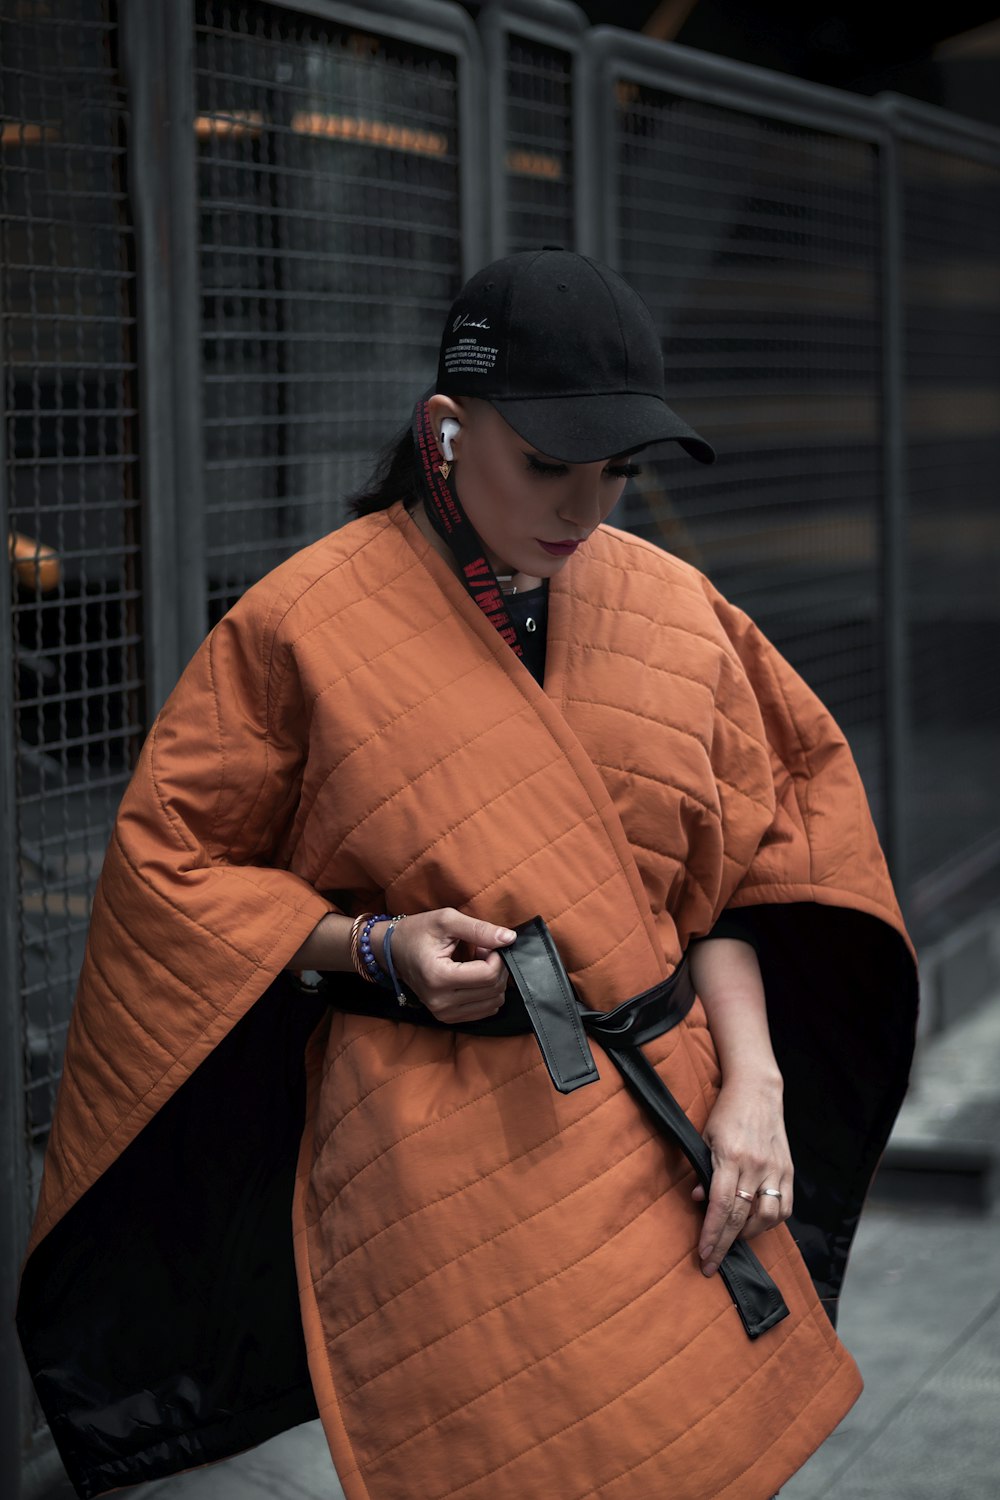 a woman in an orange kimono and a black hat